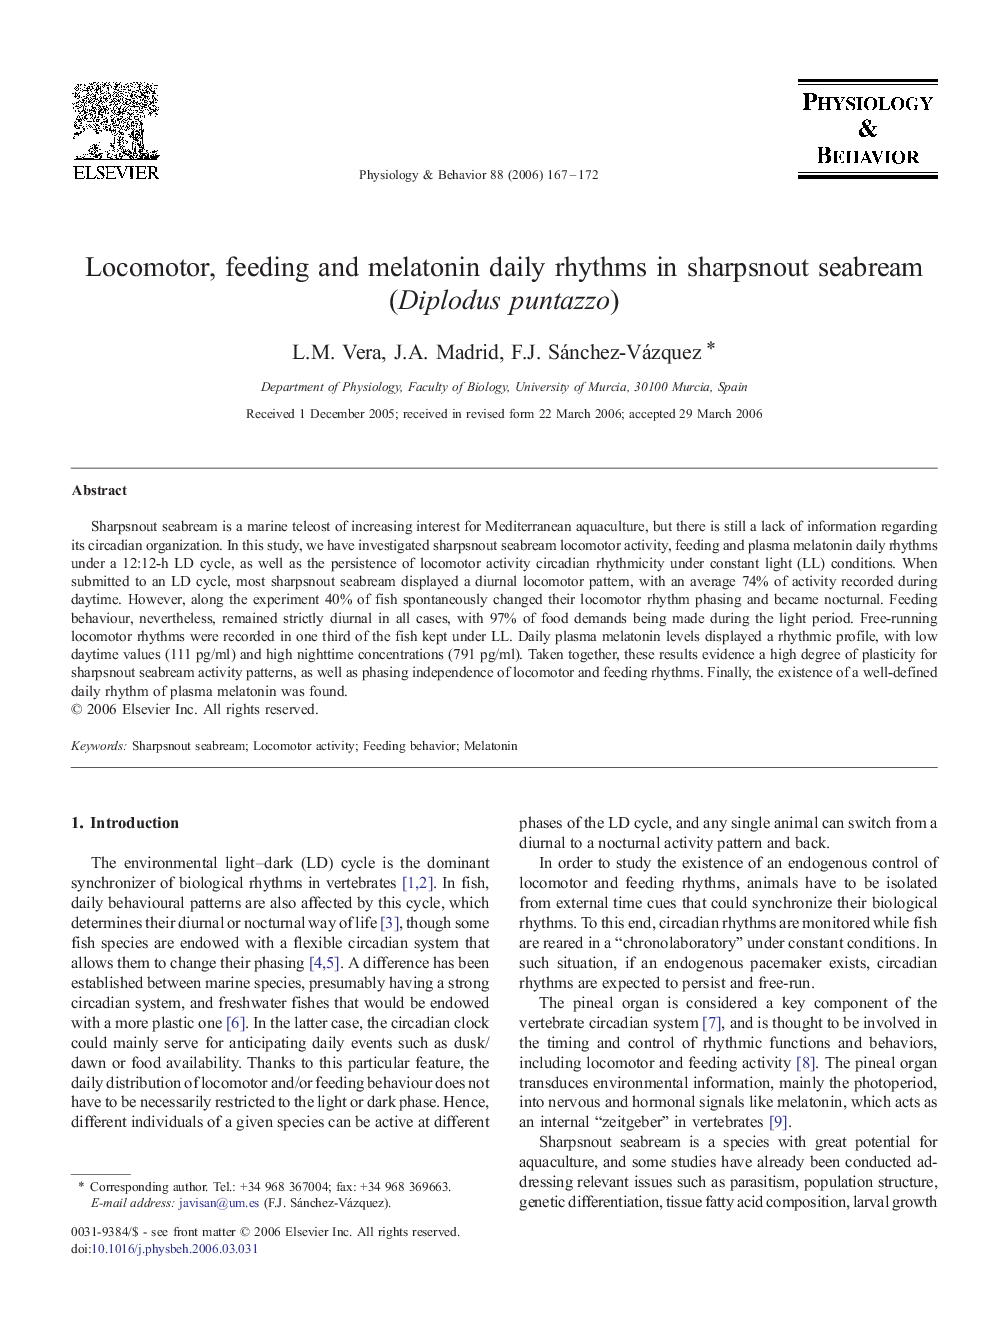 Locomotor, feeding and melatonin daily rhythms in sharpsnout seabream (Diplodus puntazzo)